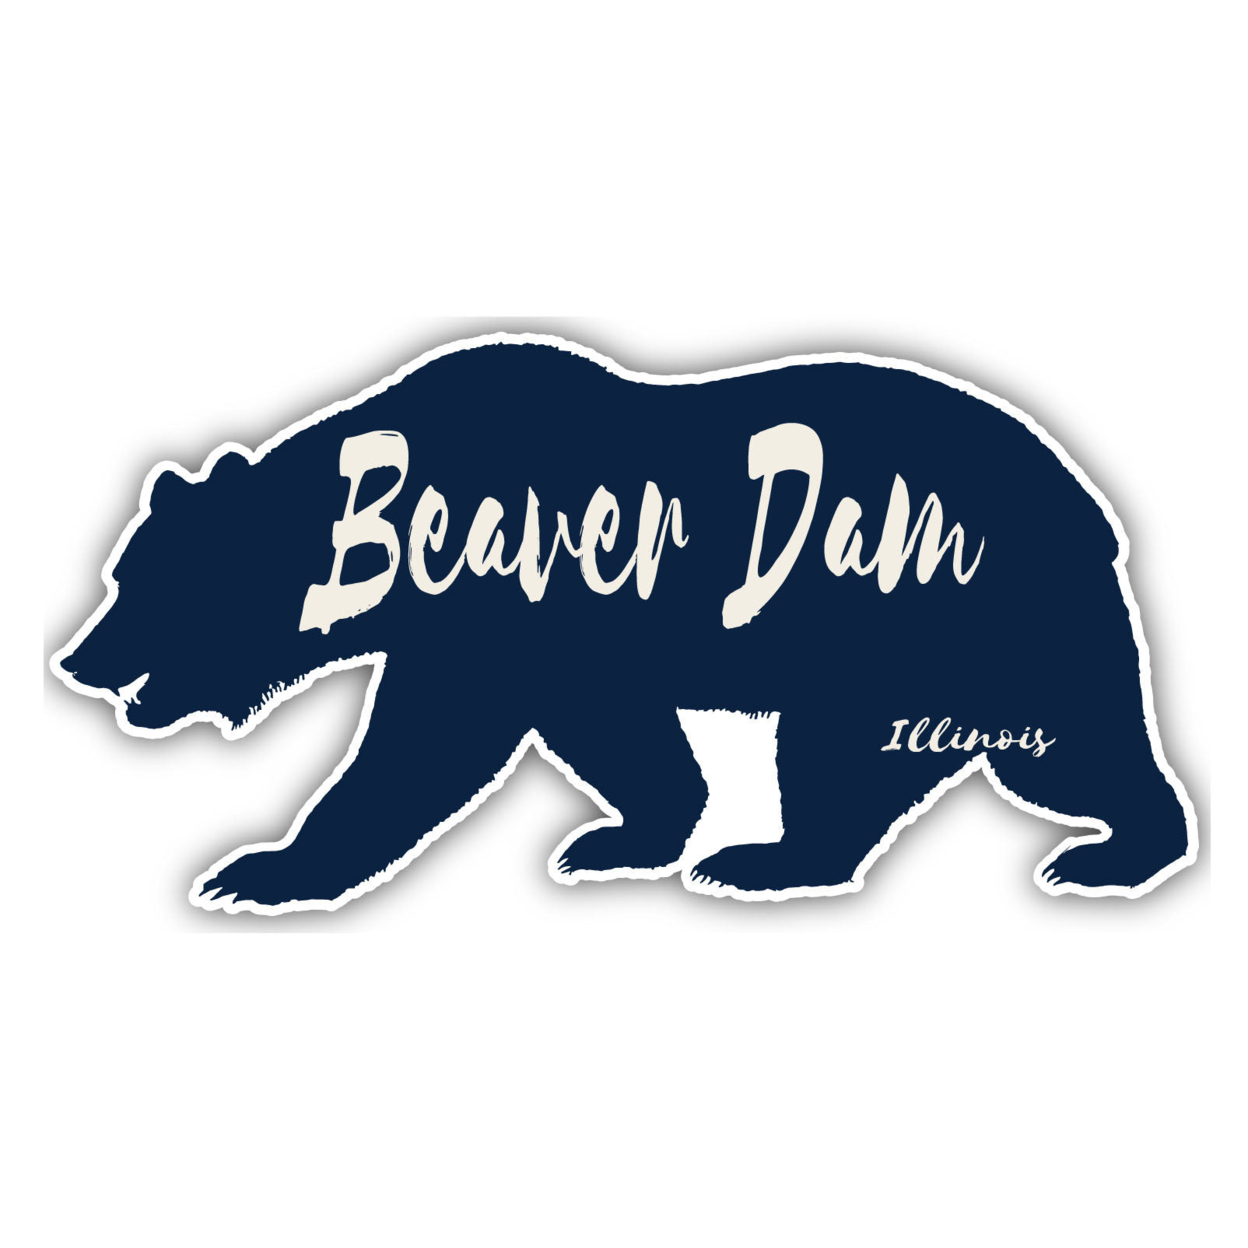 Beaver Dam Illinois Souvenir Decorative Stickers (Choose Theme And Size) - Single Unit, 8-Inch, Bear